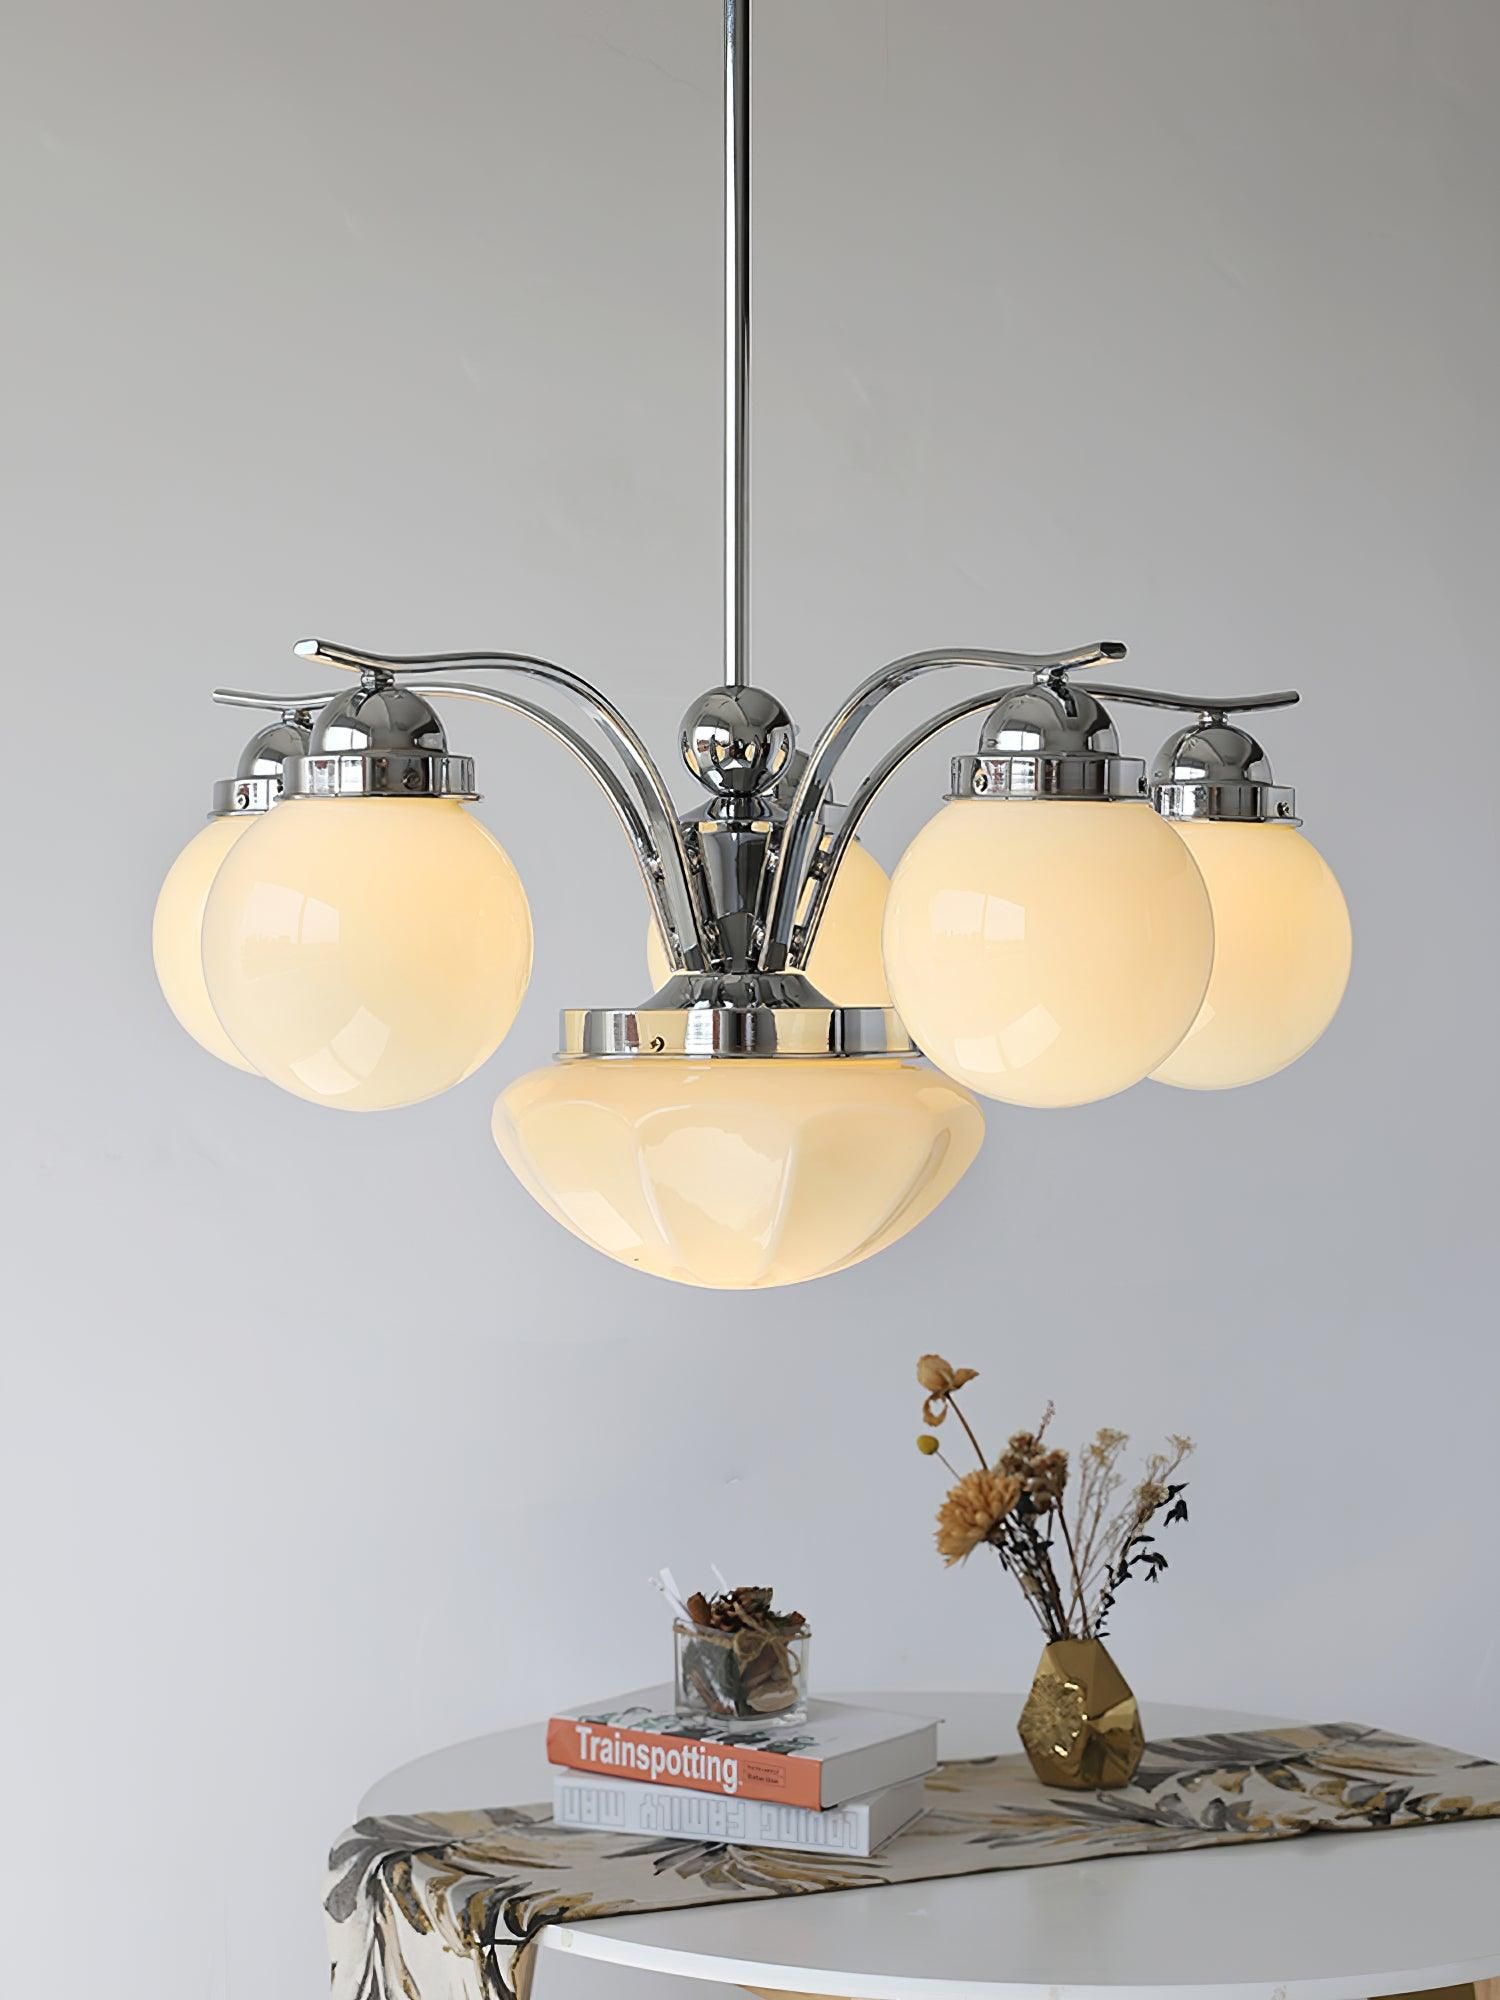 Chandelier Lamps Elegant Lighting Fixtures to Enhance Your Home Decor